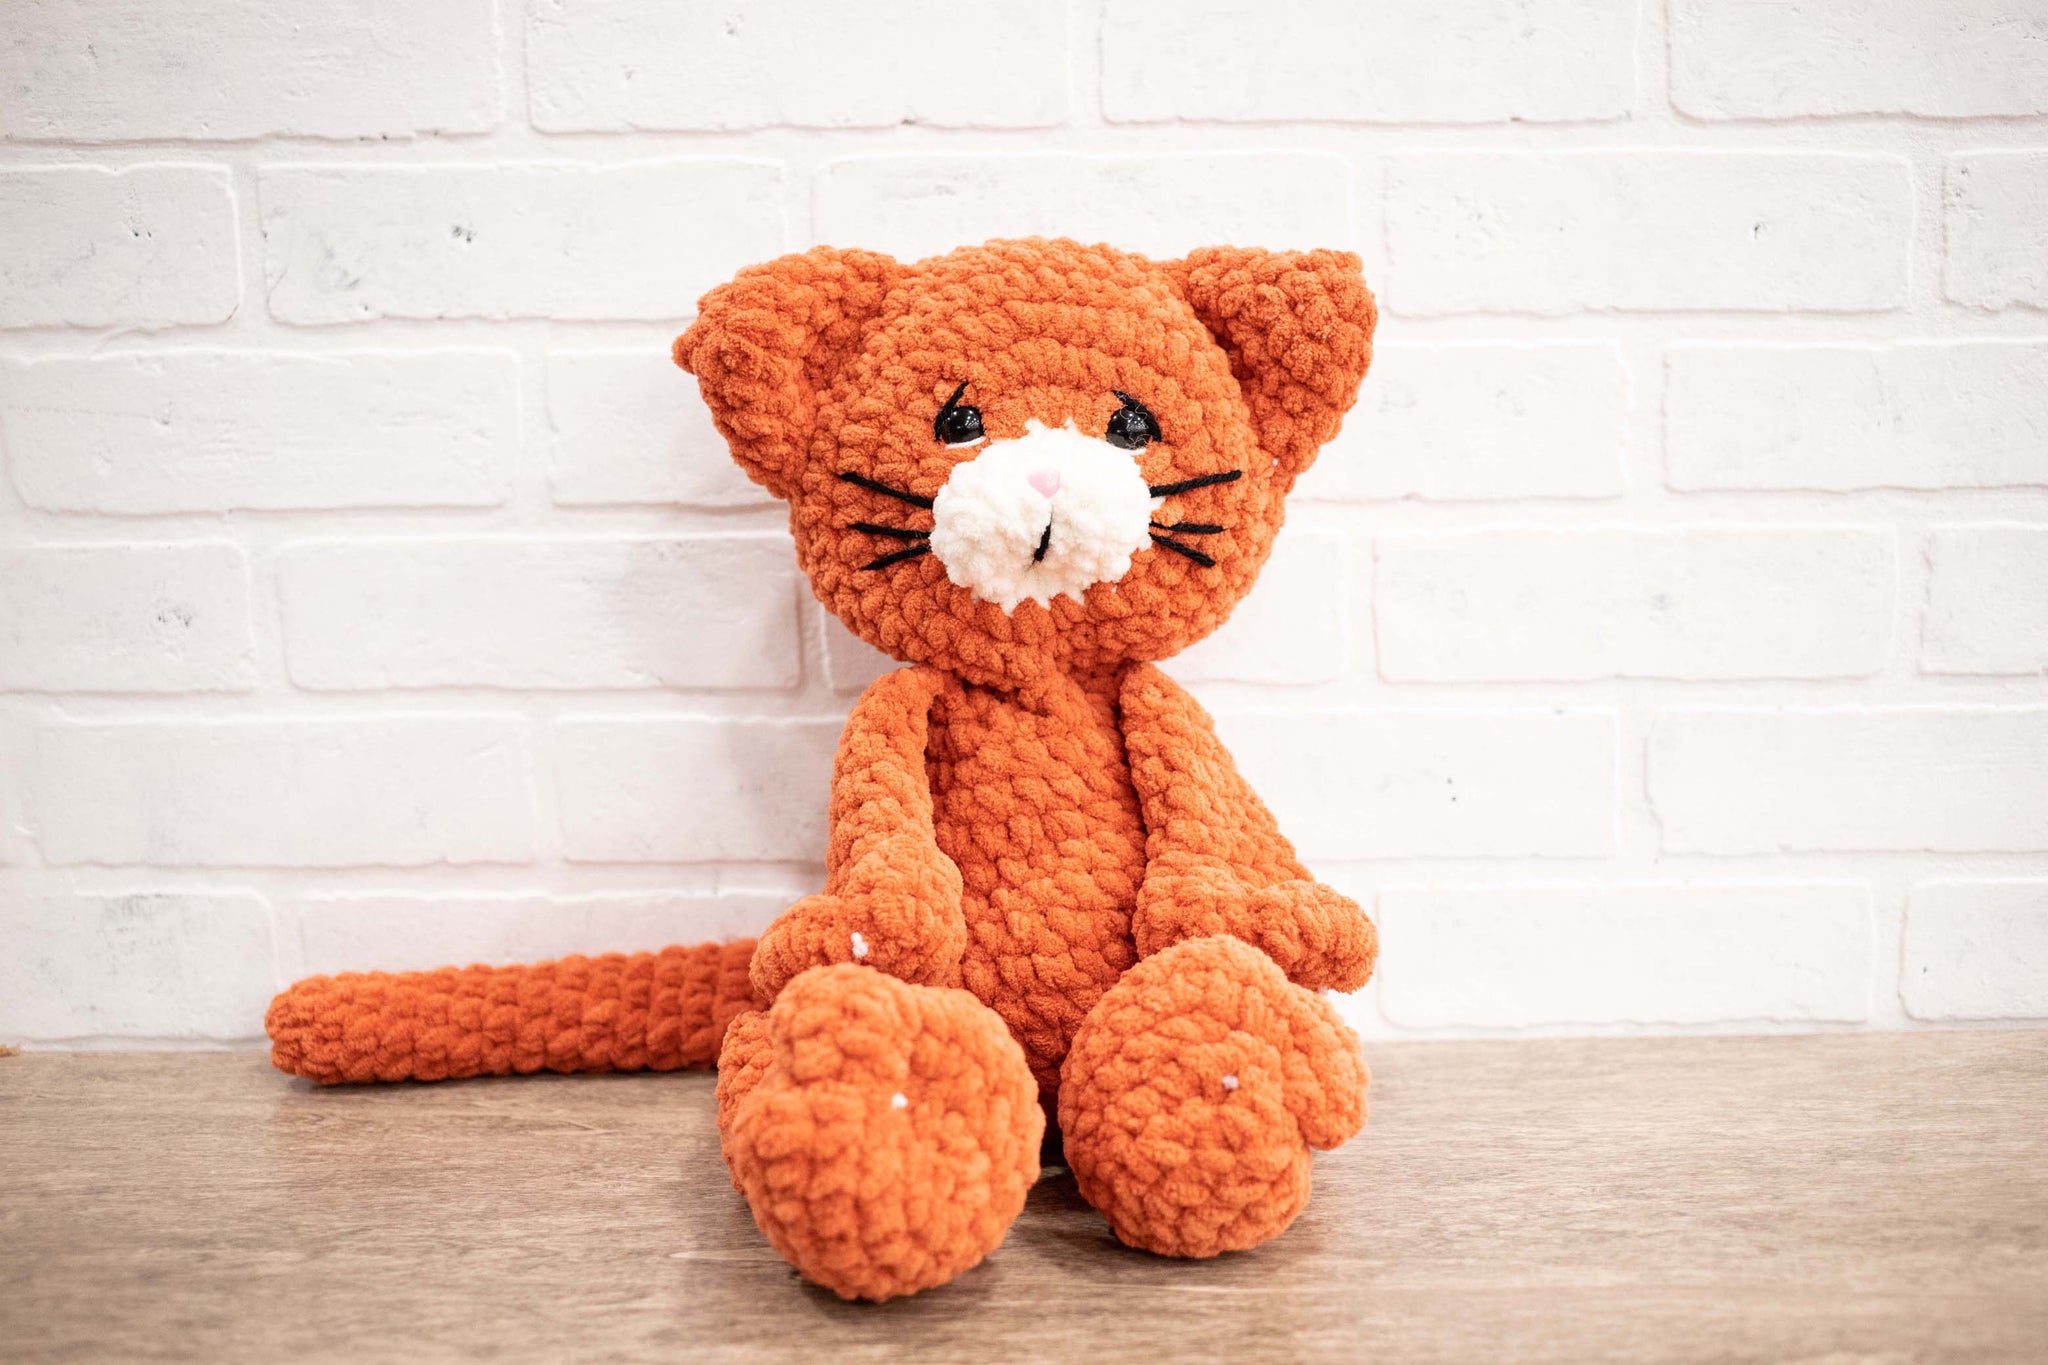 Cat, Crochet Stuffed Animal - The McGarvey Workshop